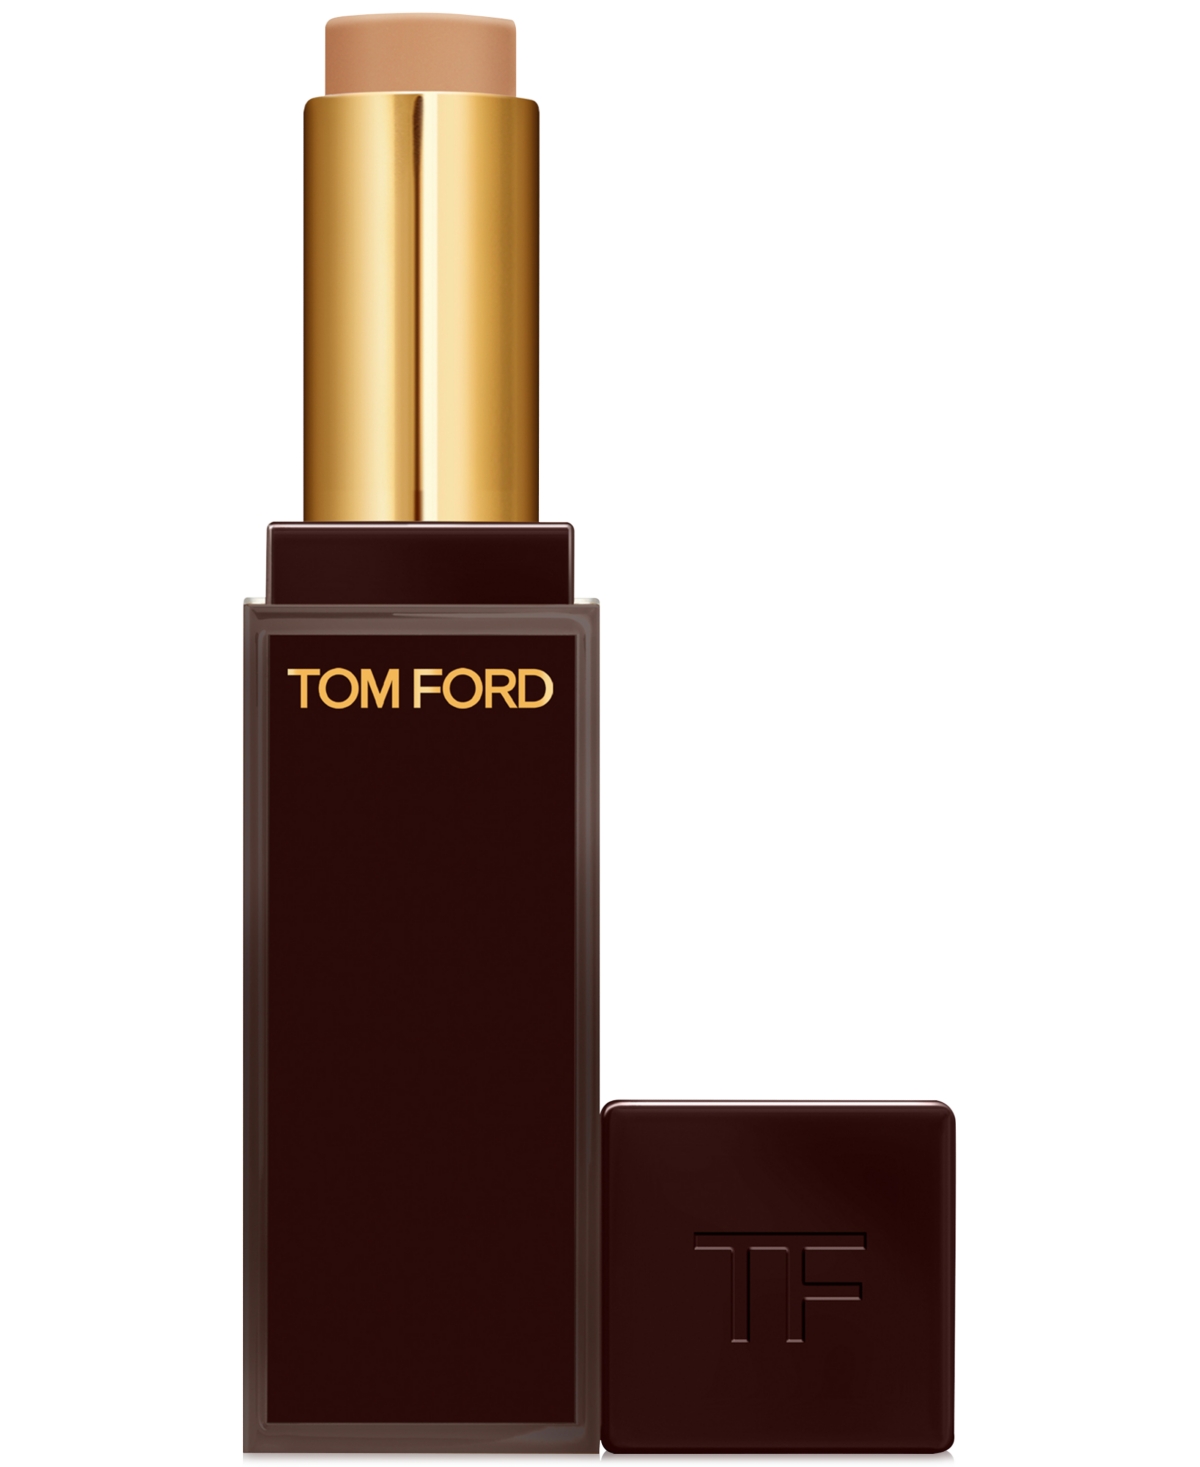 Tom Ford Traceless Soft Matte Concealer In W Hazel (medium-tan Skin With Peach Unde